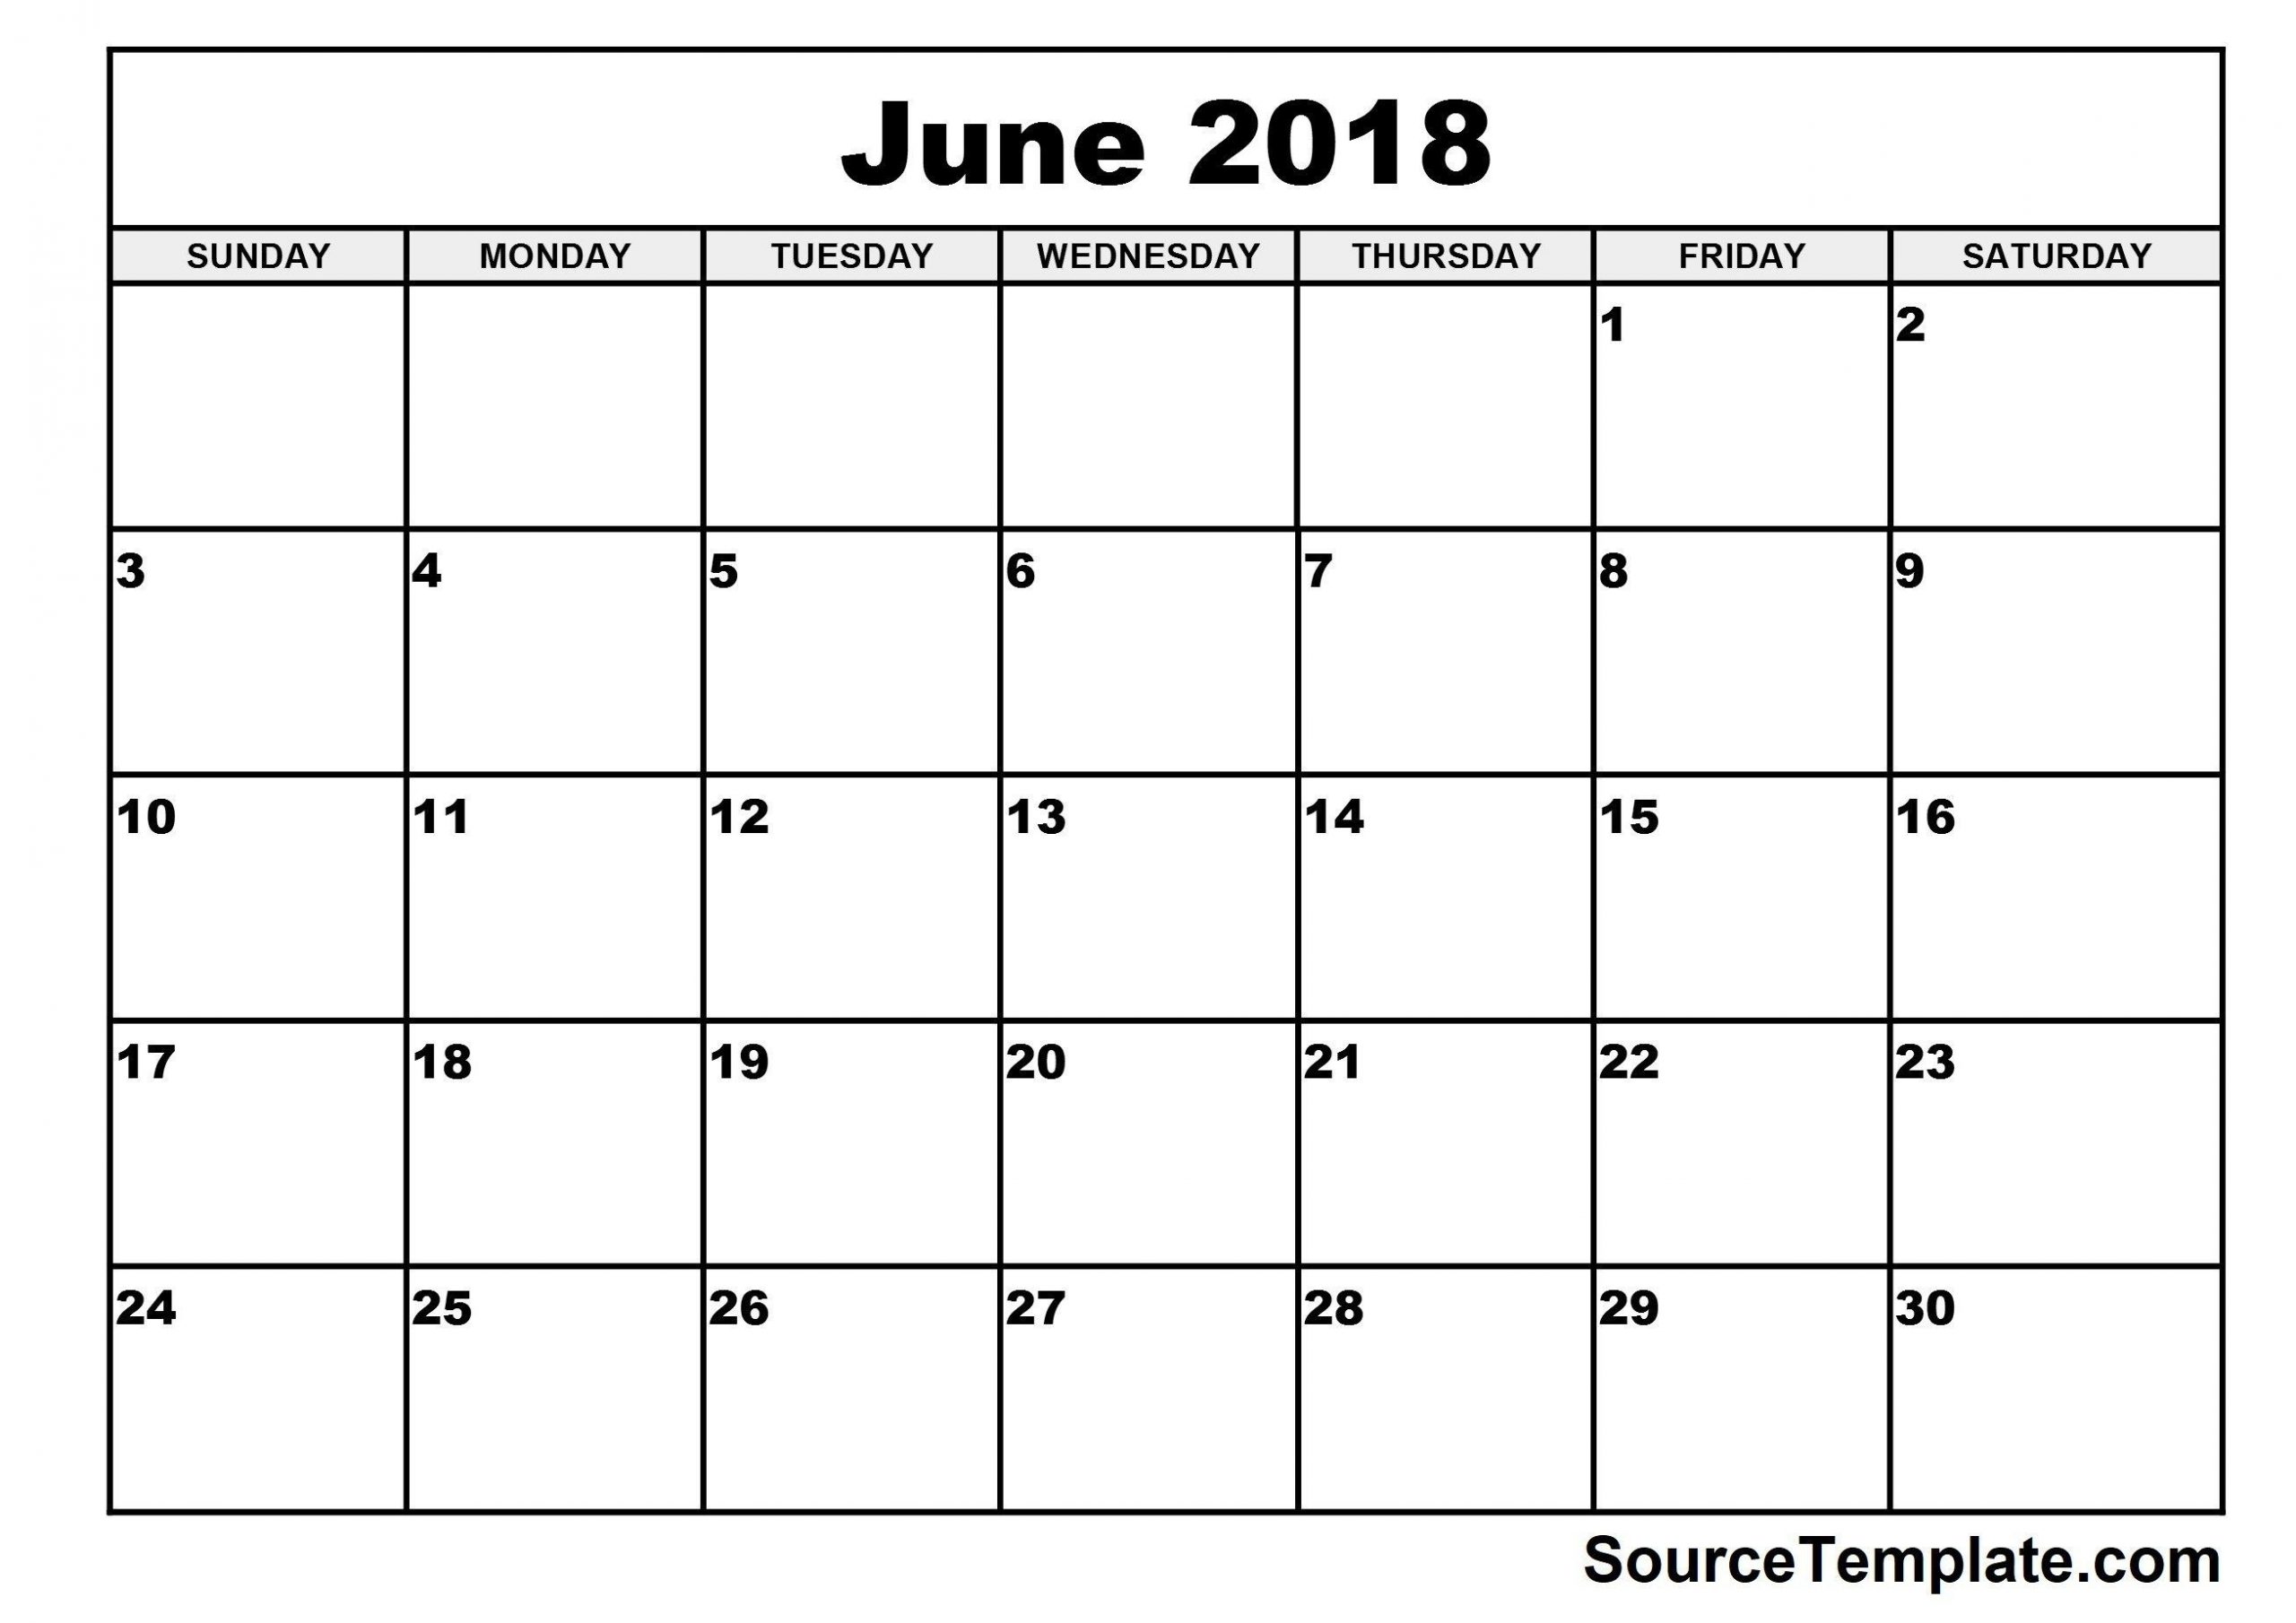 Free 5 June 2018 Calendar Printable Template Pdf Source